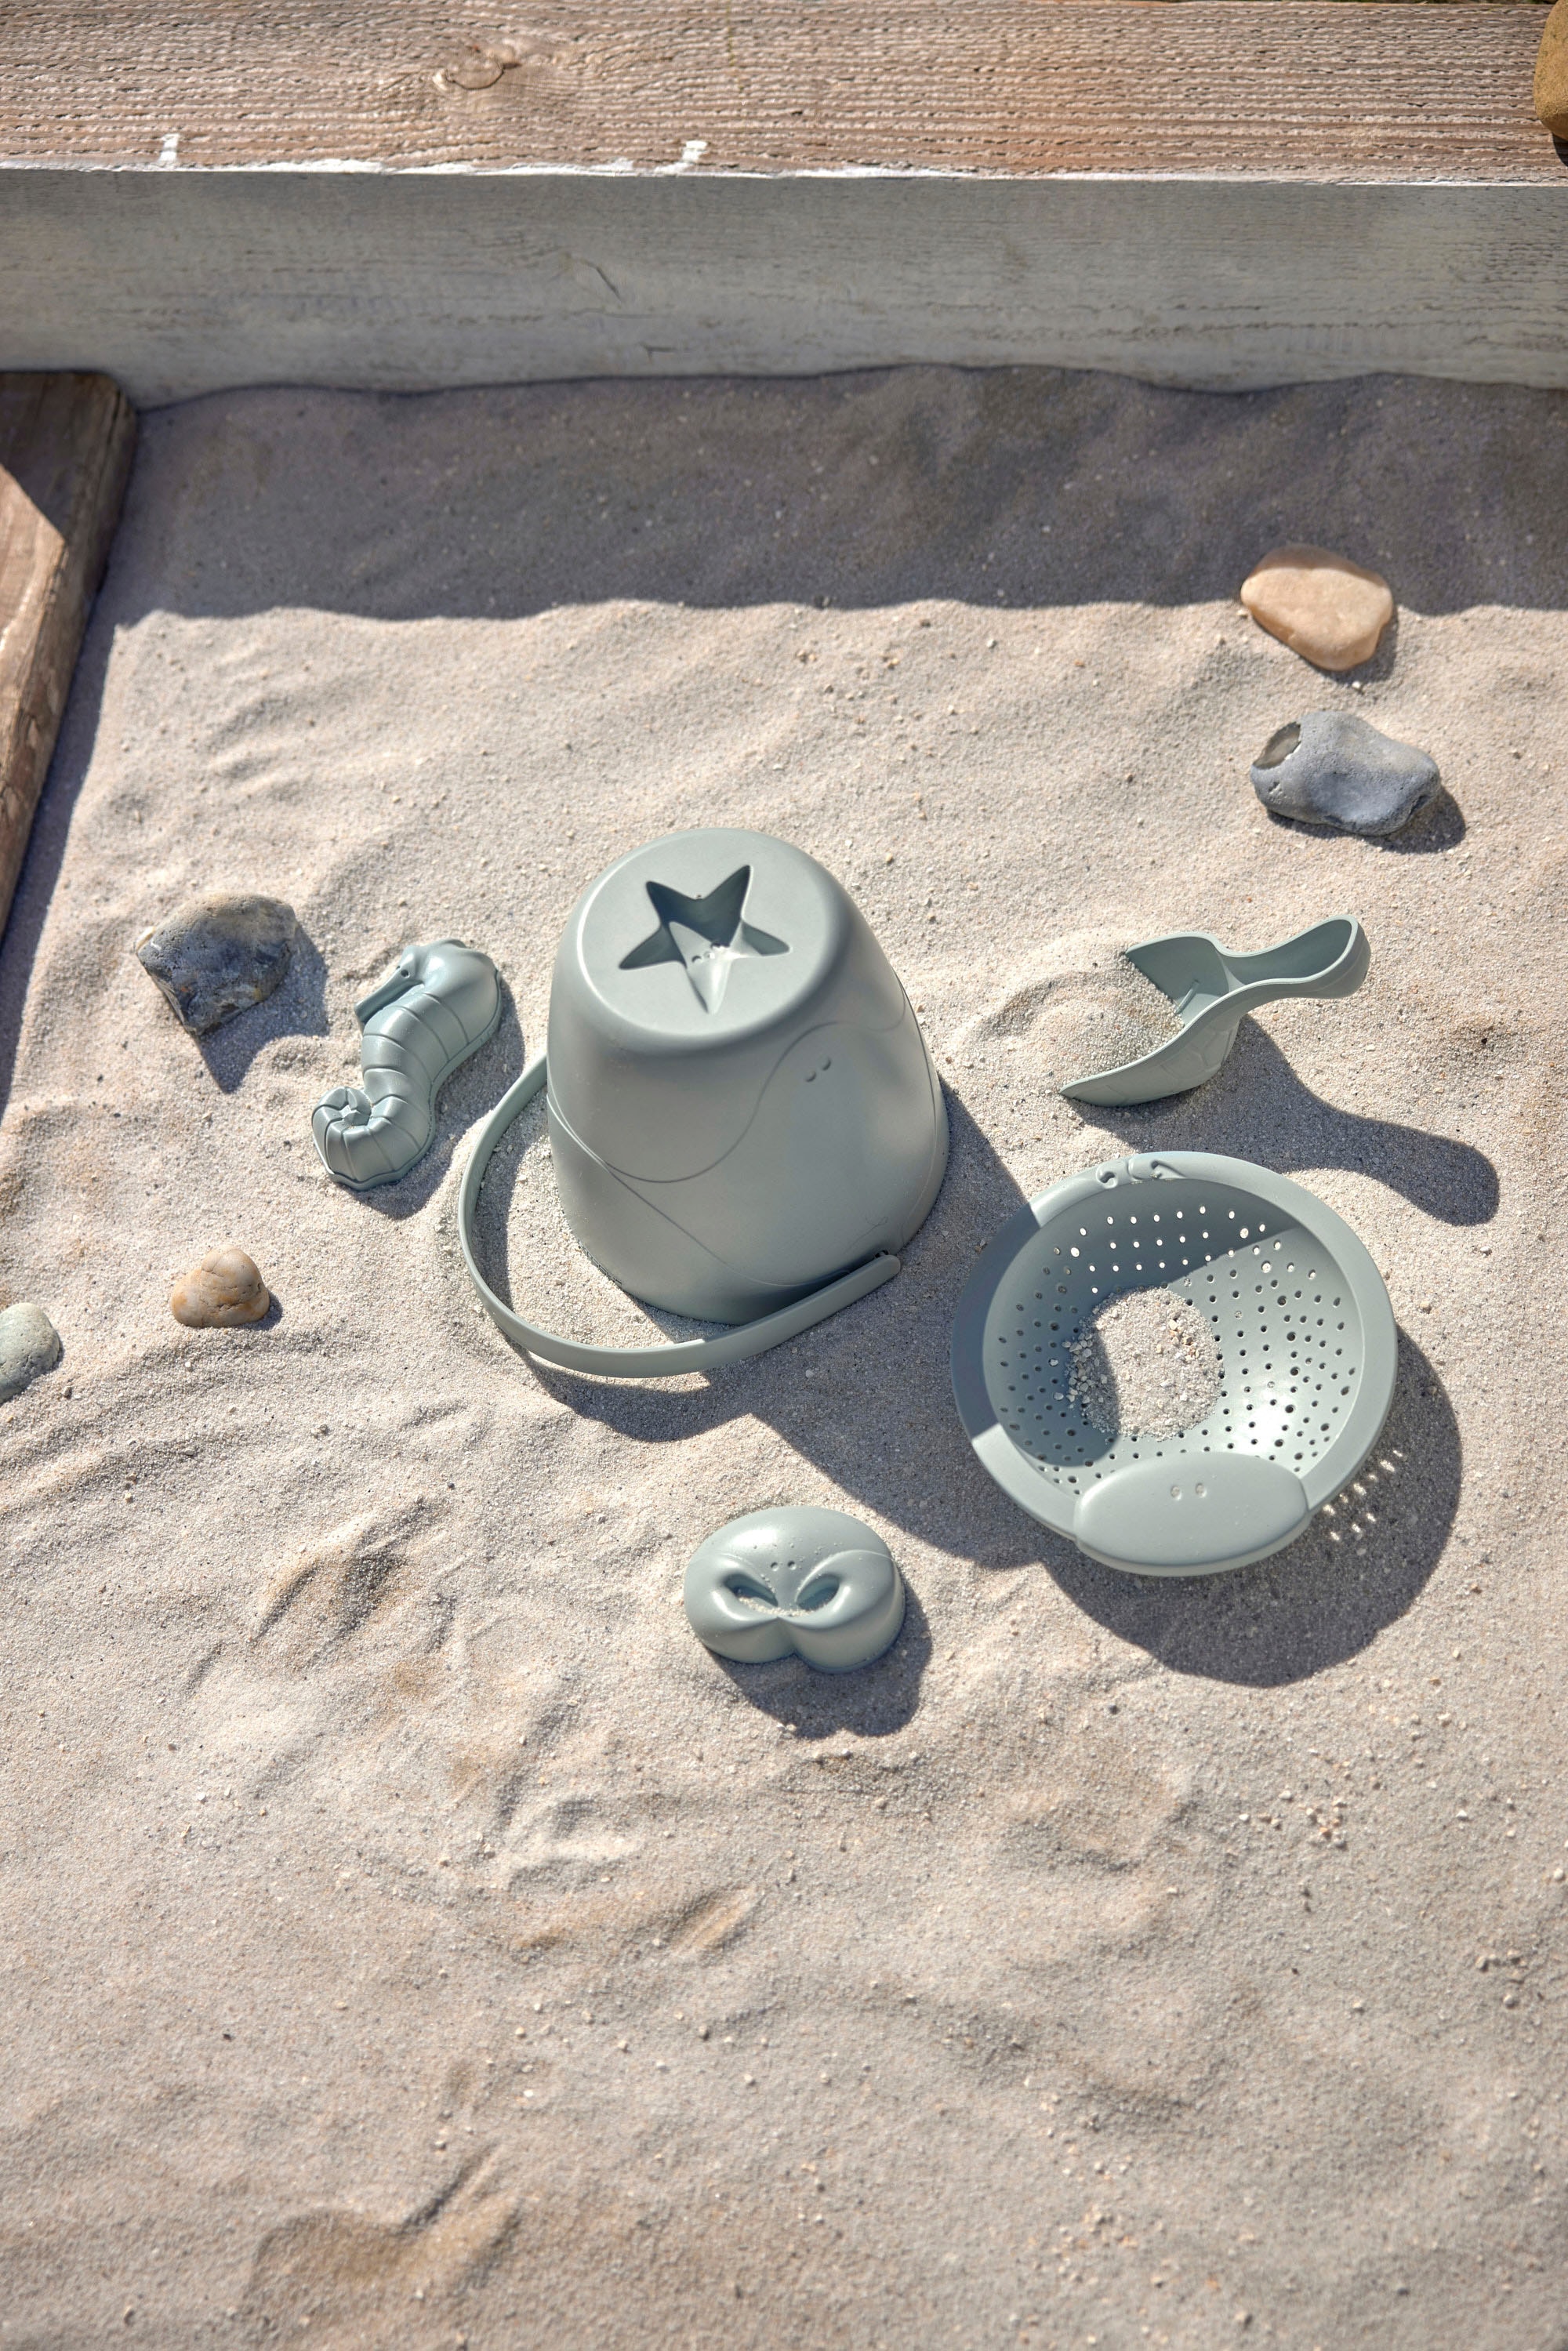 LÄSSIG Sandform-Set »Sandspielzeug 5er Set Water Friends, blue«, (Set, 5 tlg.), Material aus ressourcenschonendem Biokomposit